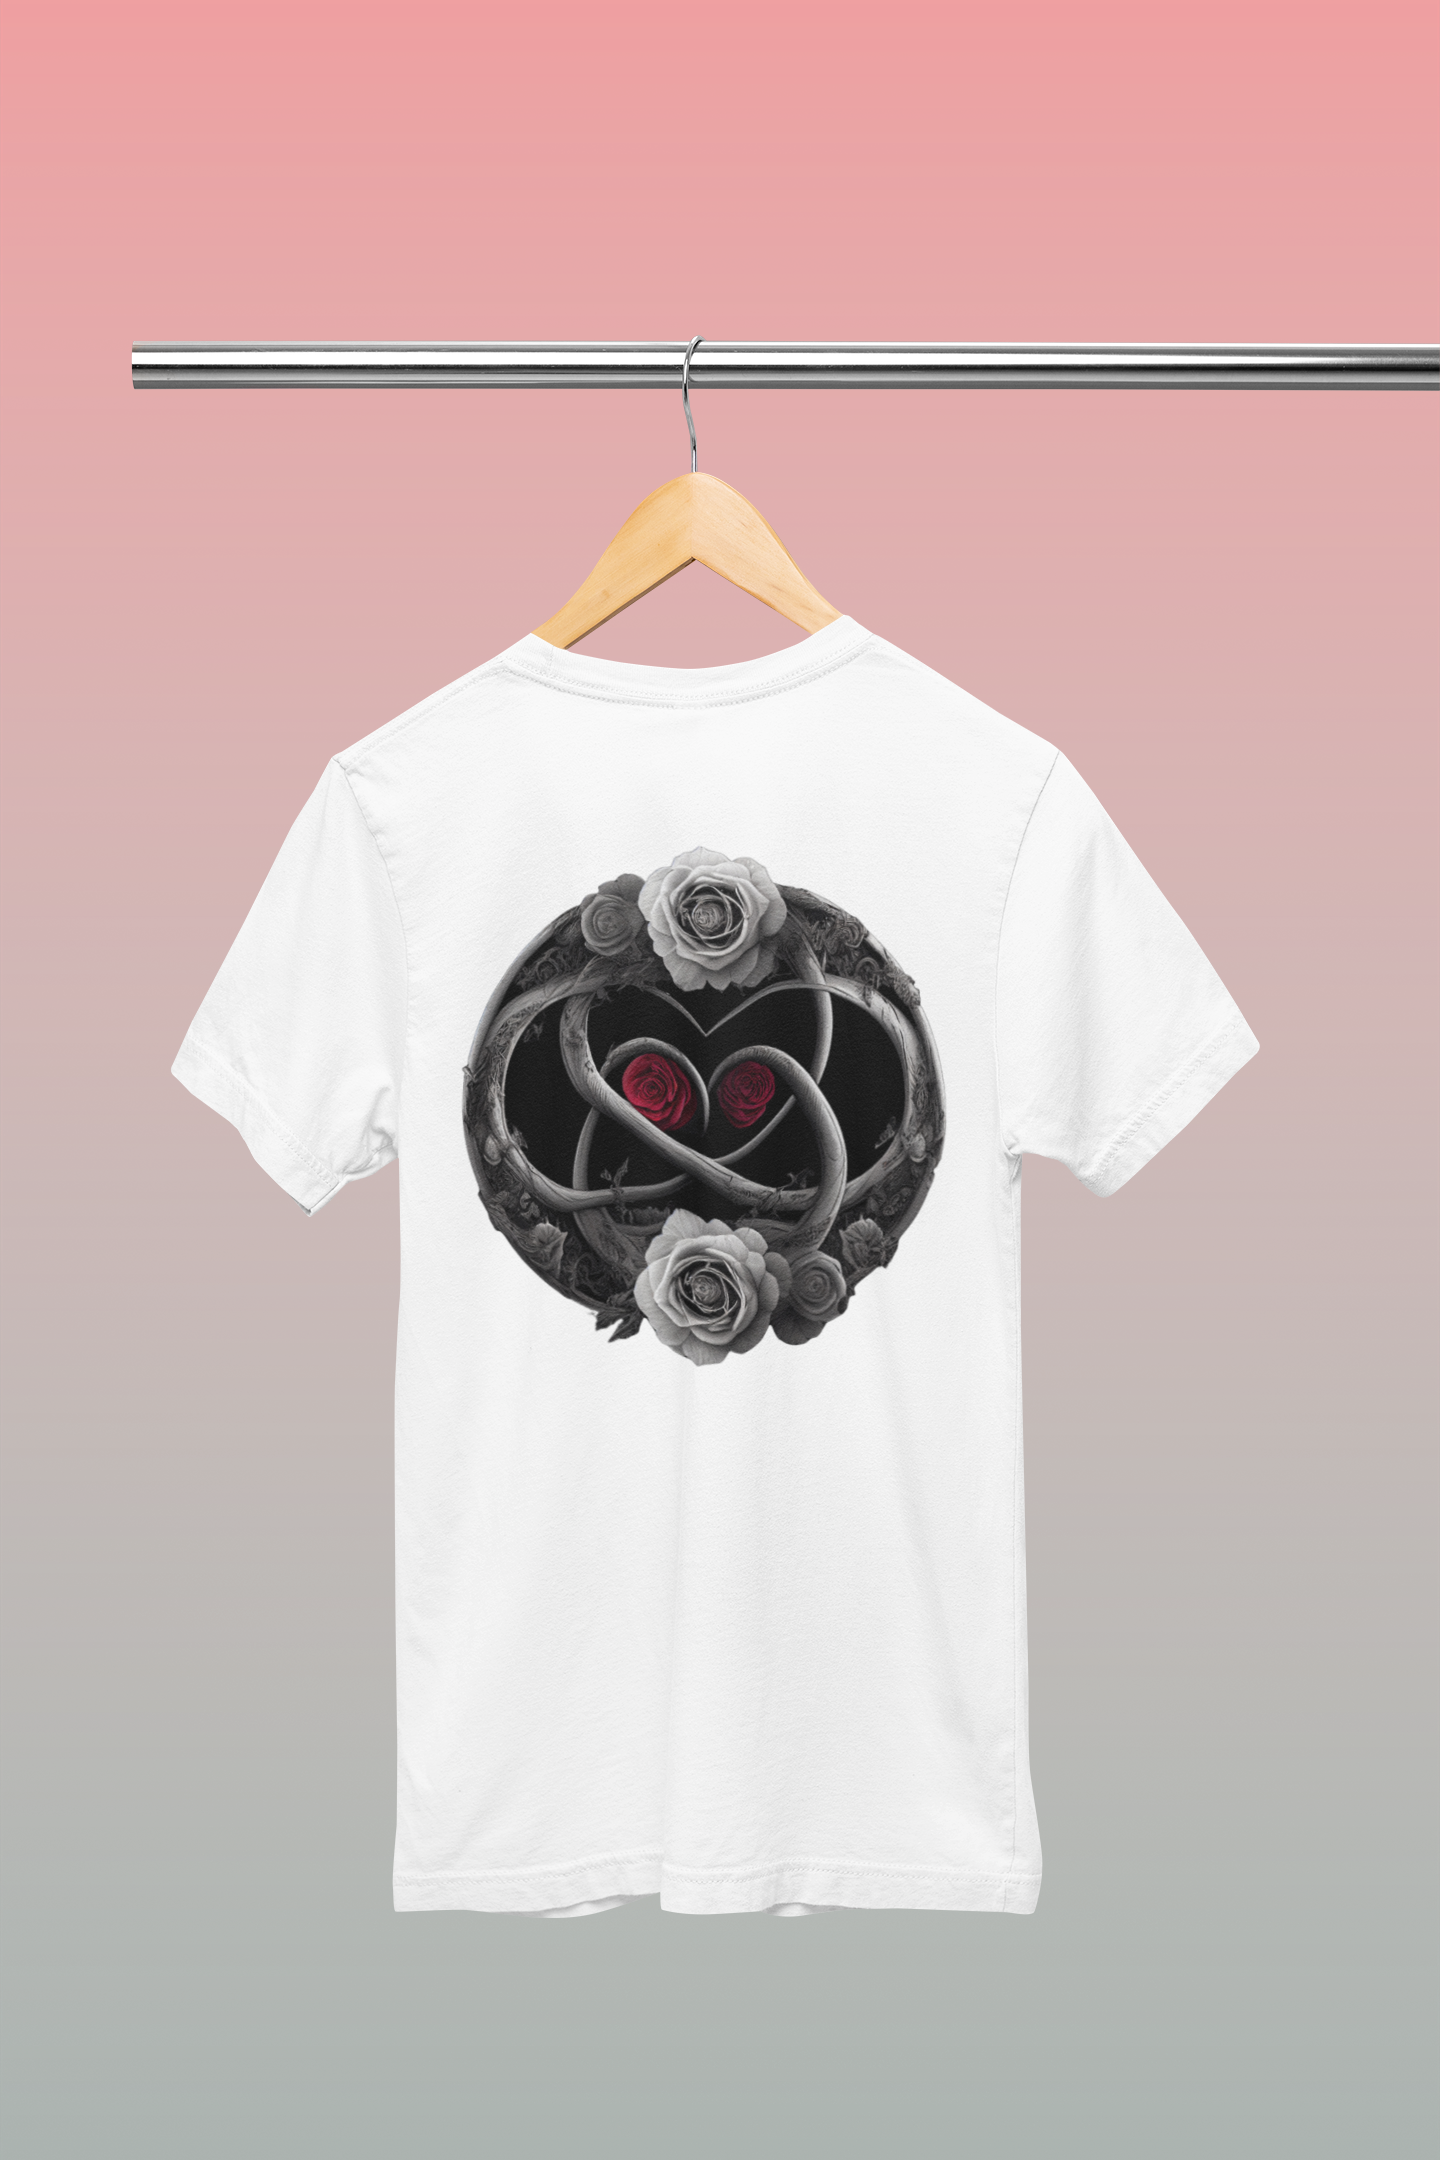 Thorns x Roses T-Shirt